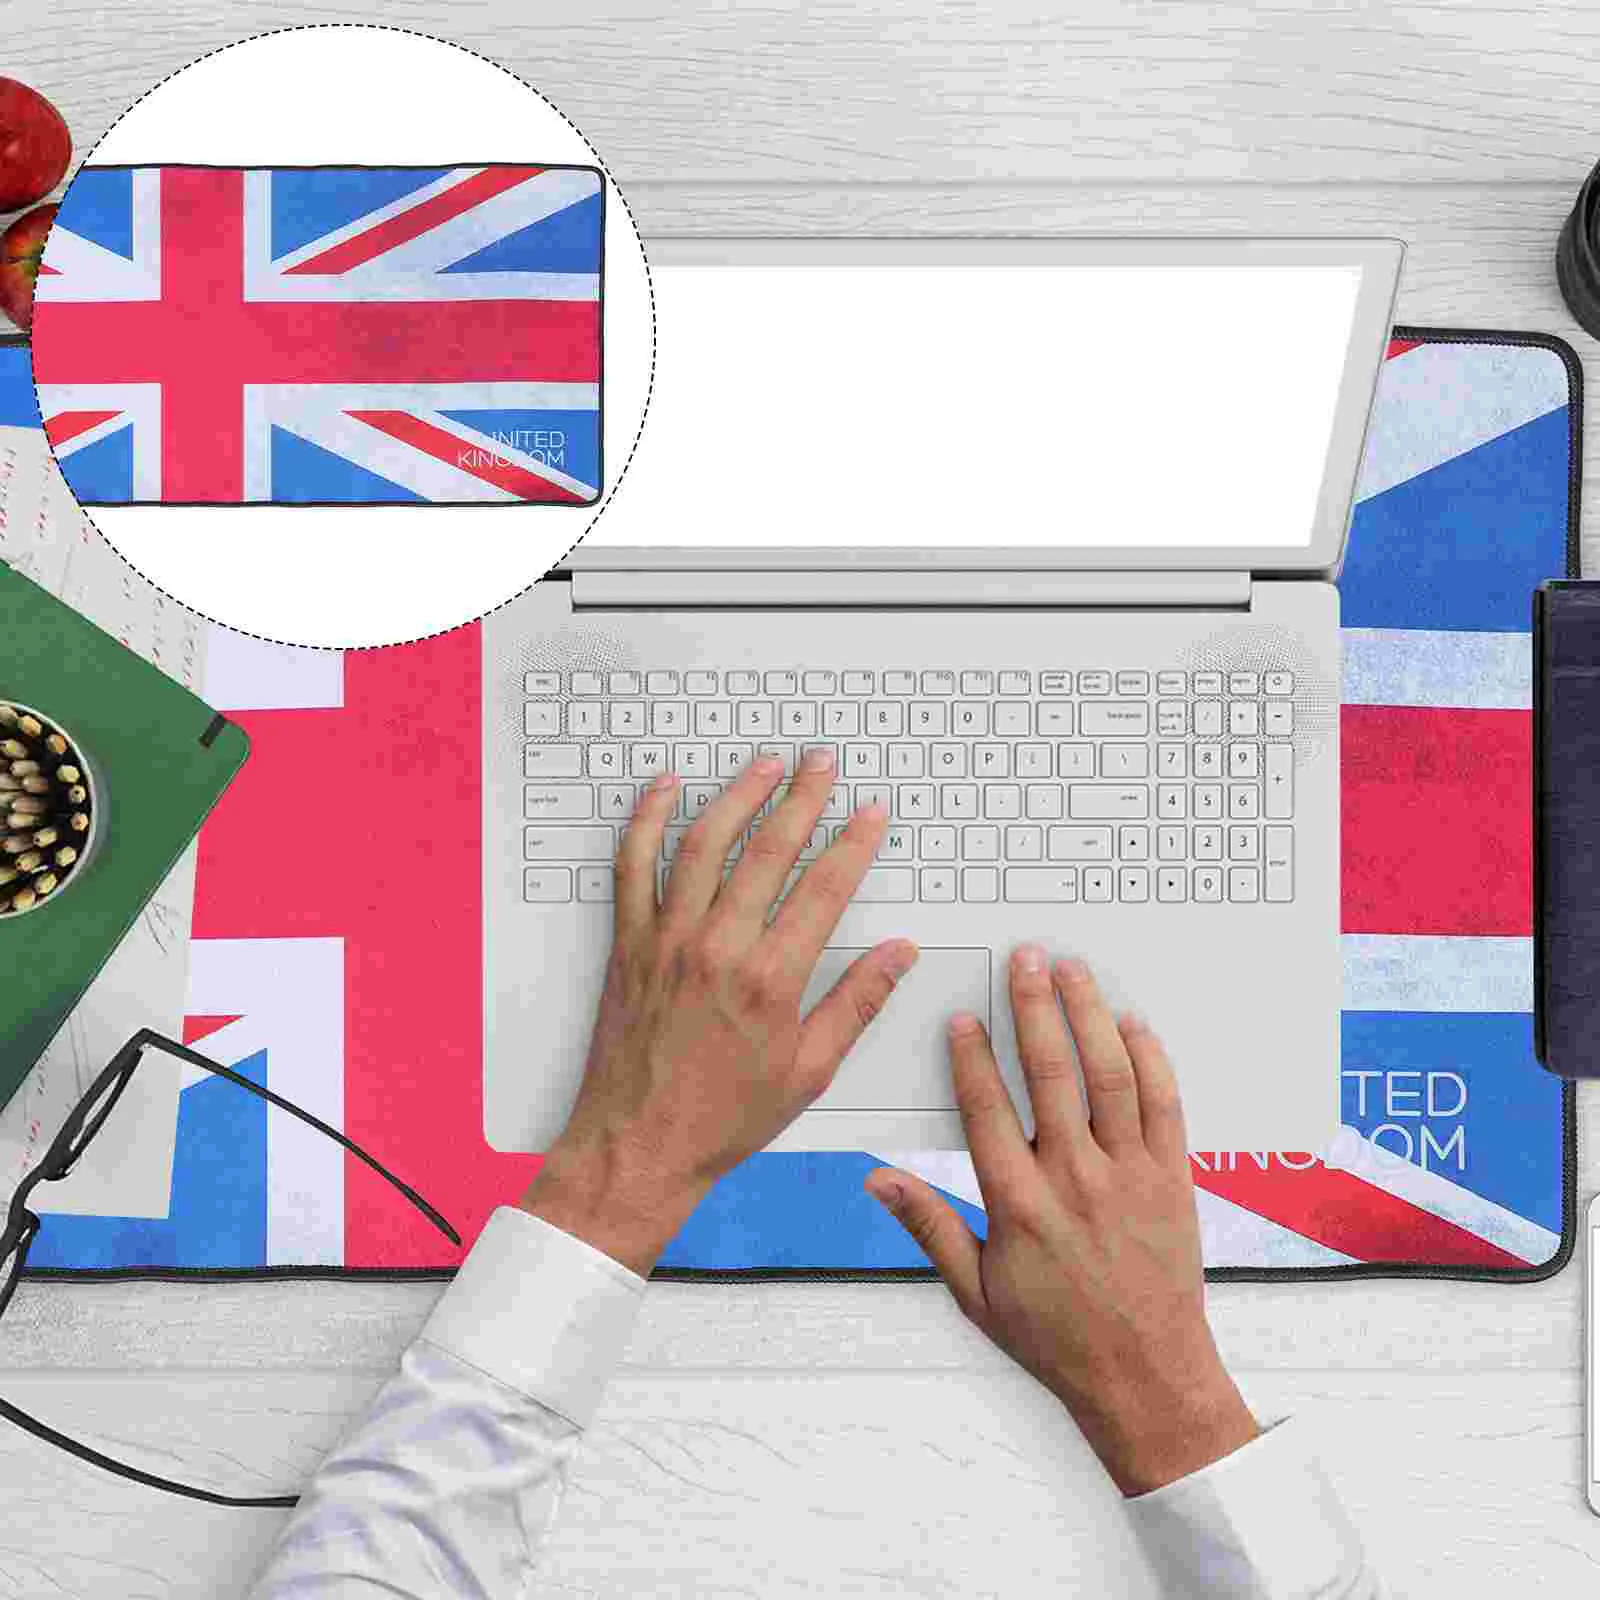 

Pad Mat Computer Gaming Flag Desk Laptoprubber Office Led Mousepad Mousepads Keyboard Union Uk British Jackbases Non Skid Anti